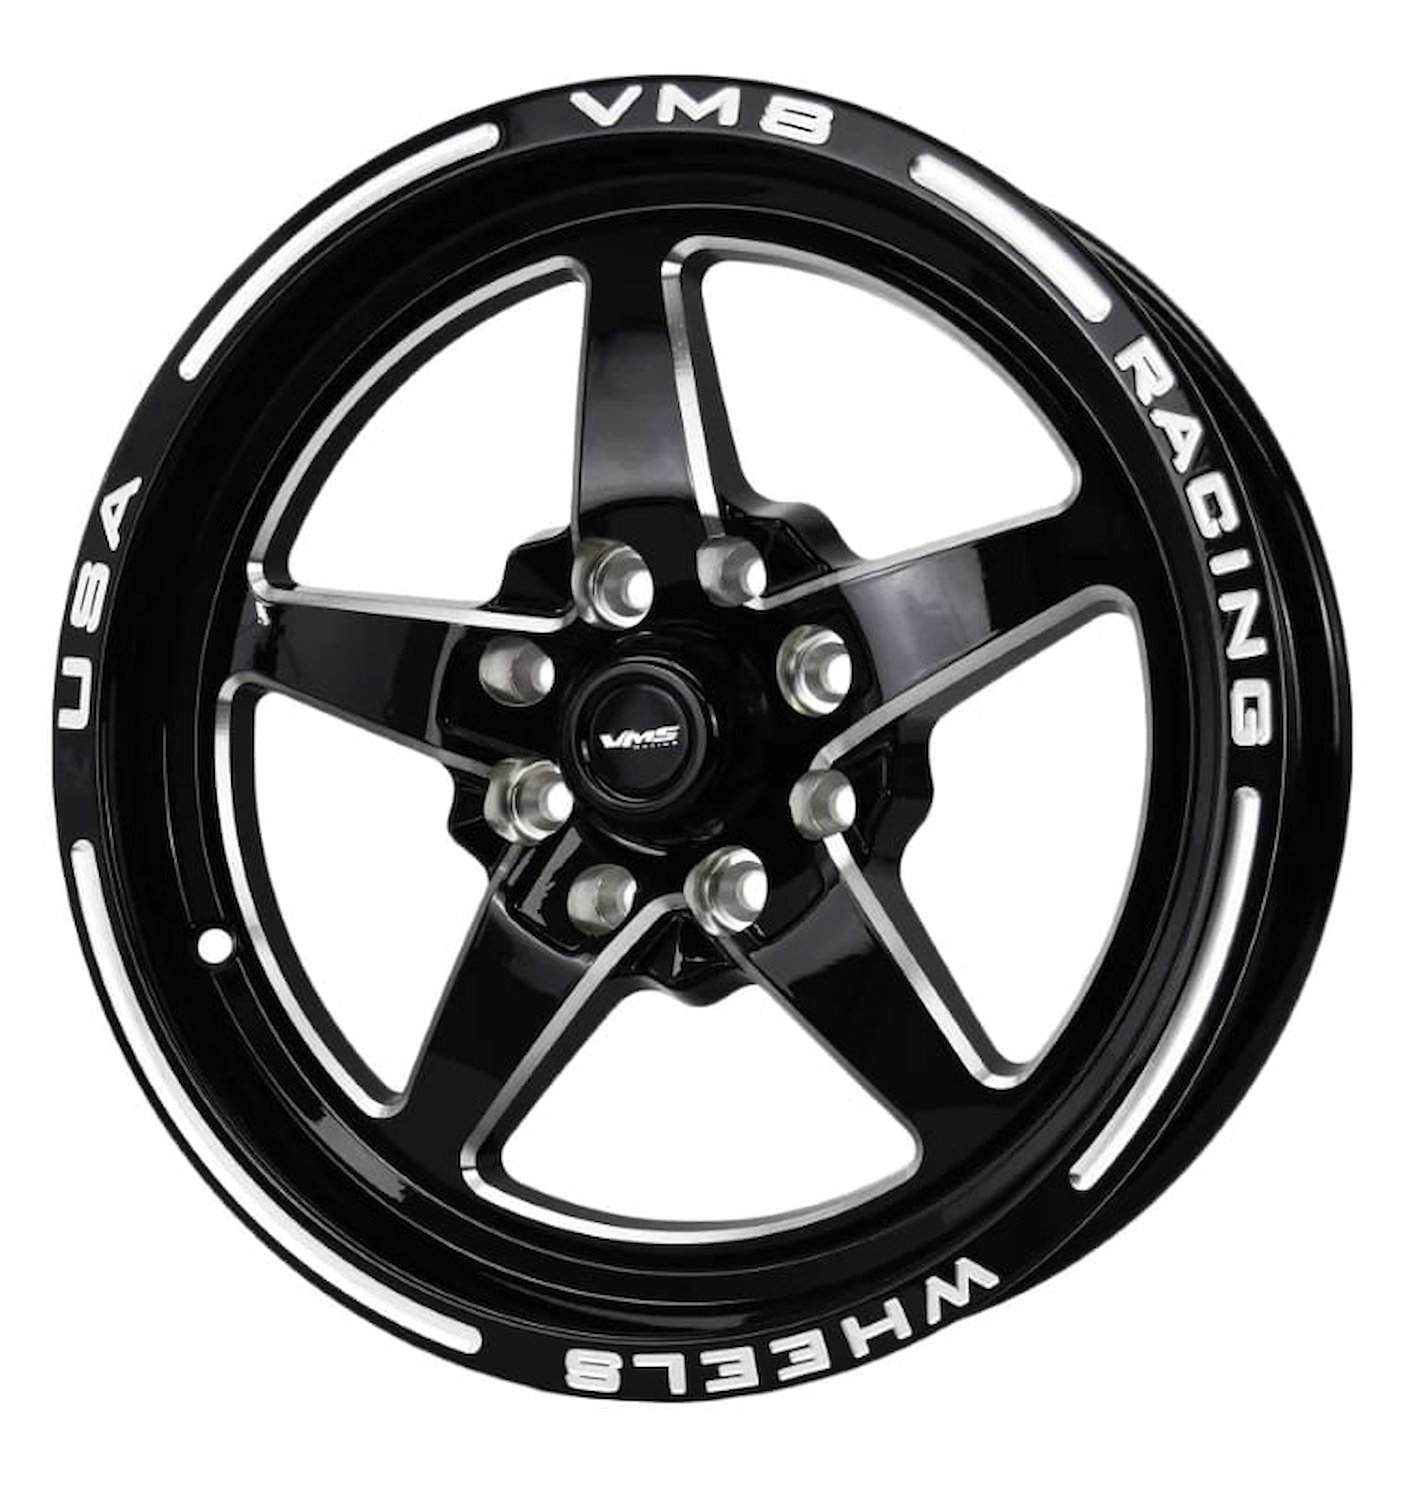 VWST055 V-Star Wheel, Size: 15" x 3.5", Bolt Pattern: 5 x 4 3/4" (120.65 mm) [Finish: Gloss Black Milled]